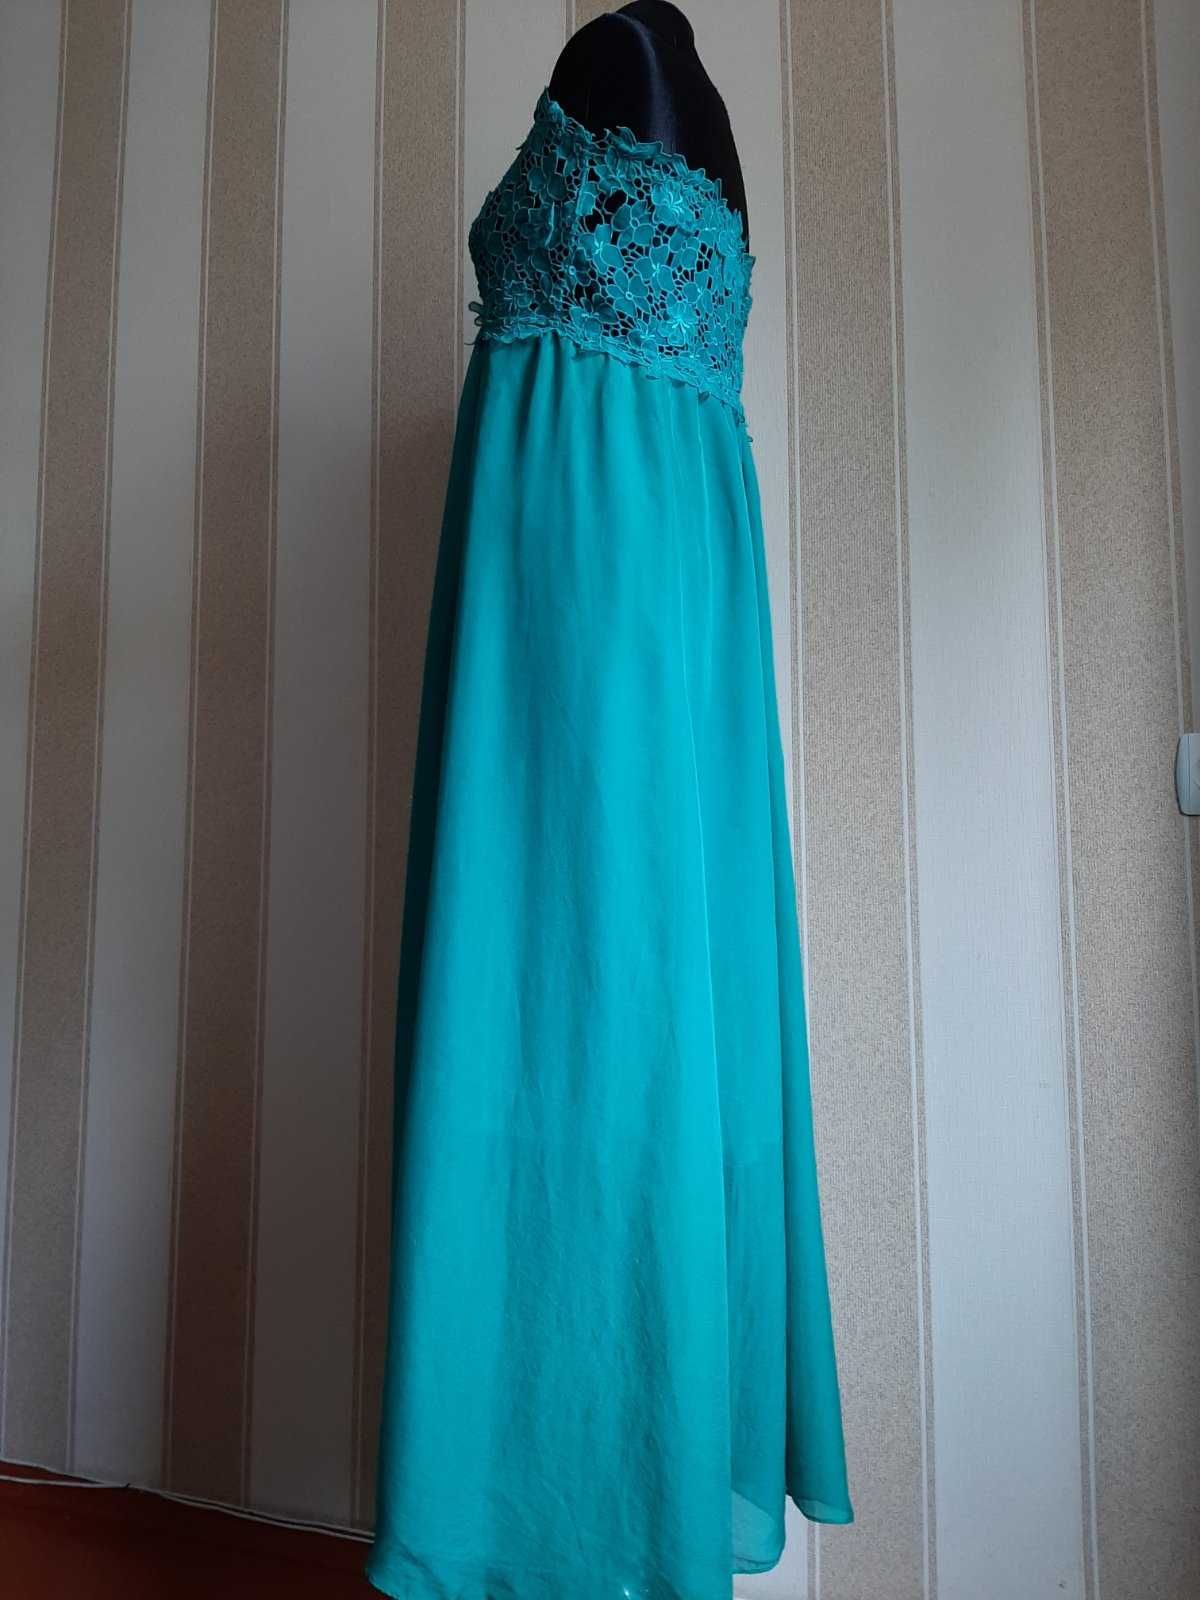 Сарафан-платье летнее,  длинное, миди\макси, натуральный шелк.